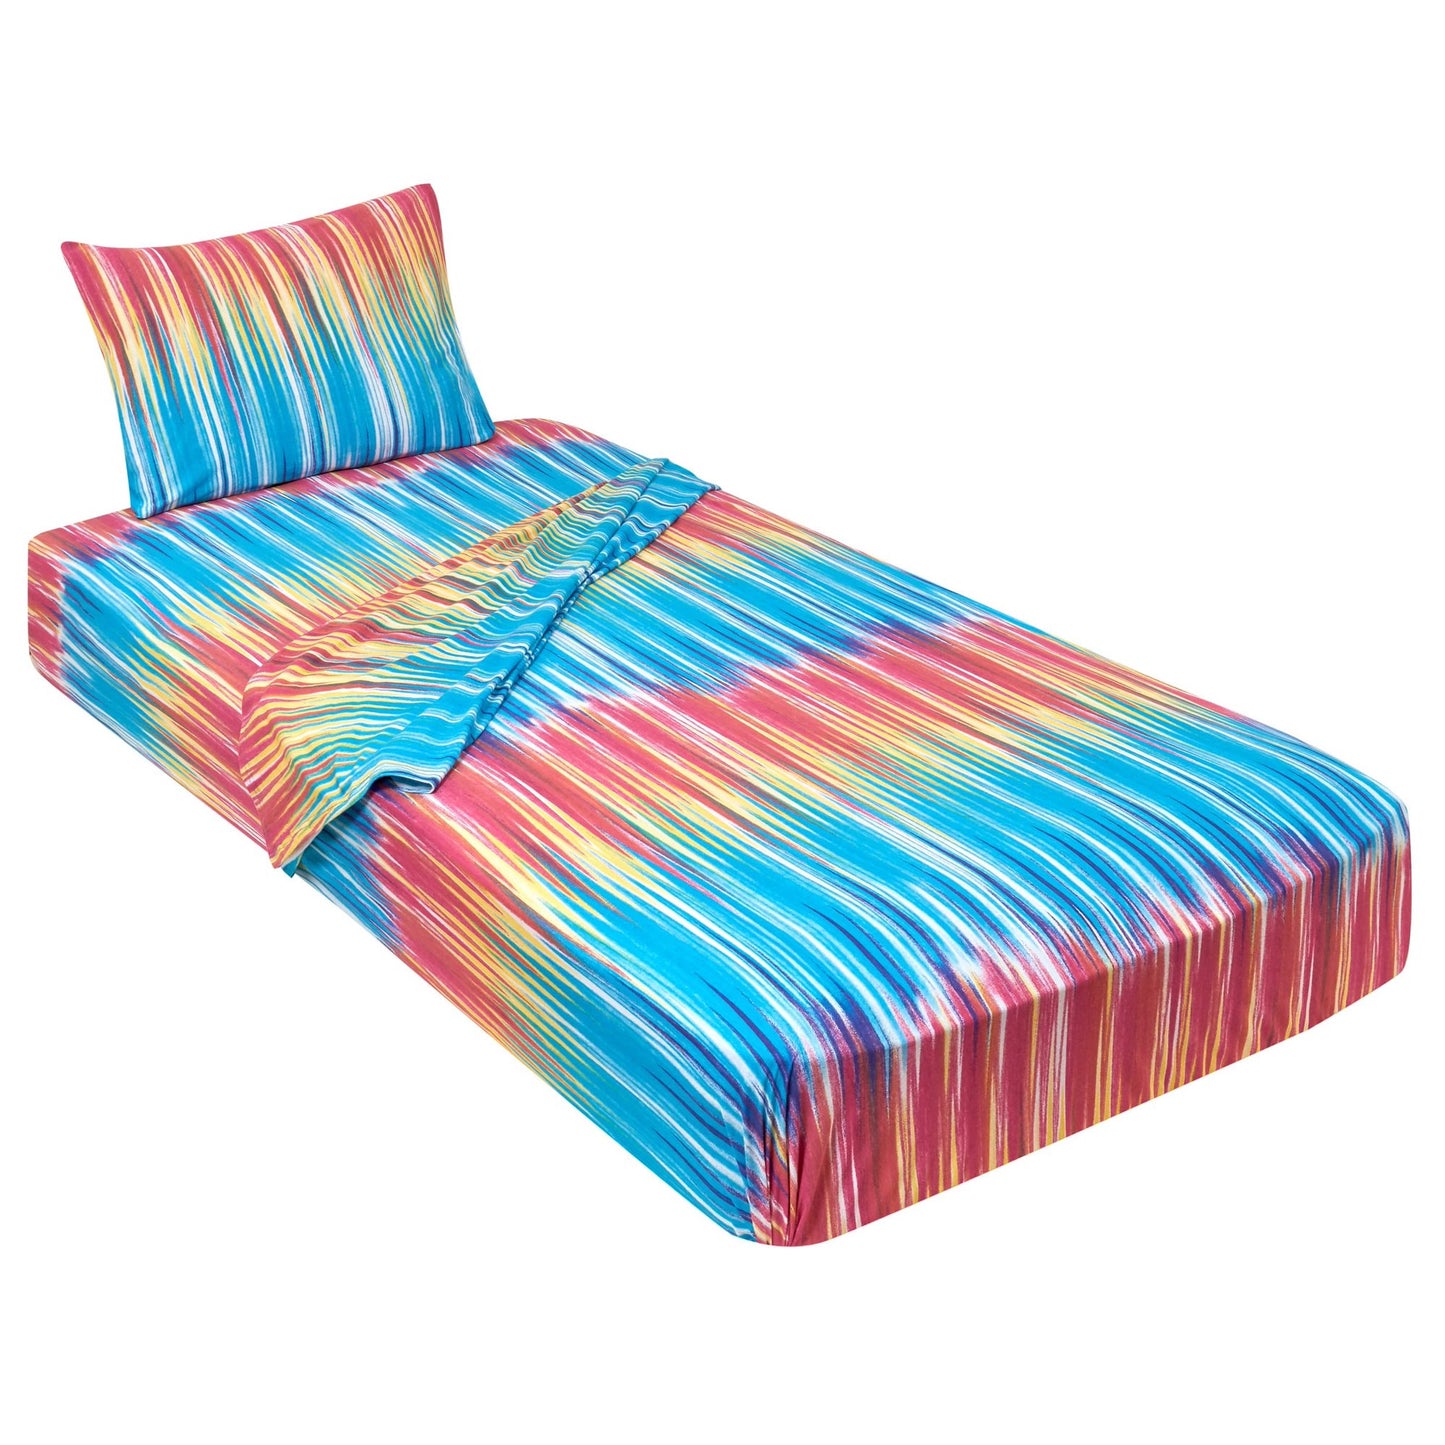 100% Combed T-Shirt Cotton Jersey Knit Camp Sheet Set, 1 Fitted cot Sheet, 1 Flat Sheet, 1 Standard Pillow case Rainbow Print (Twin)…